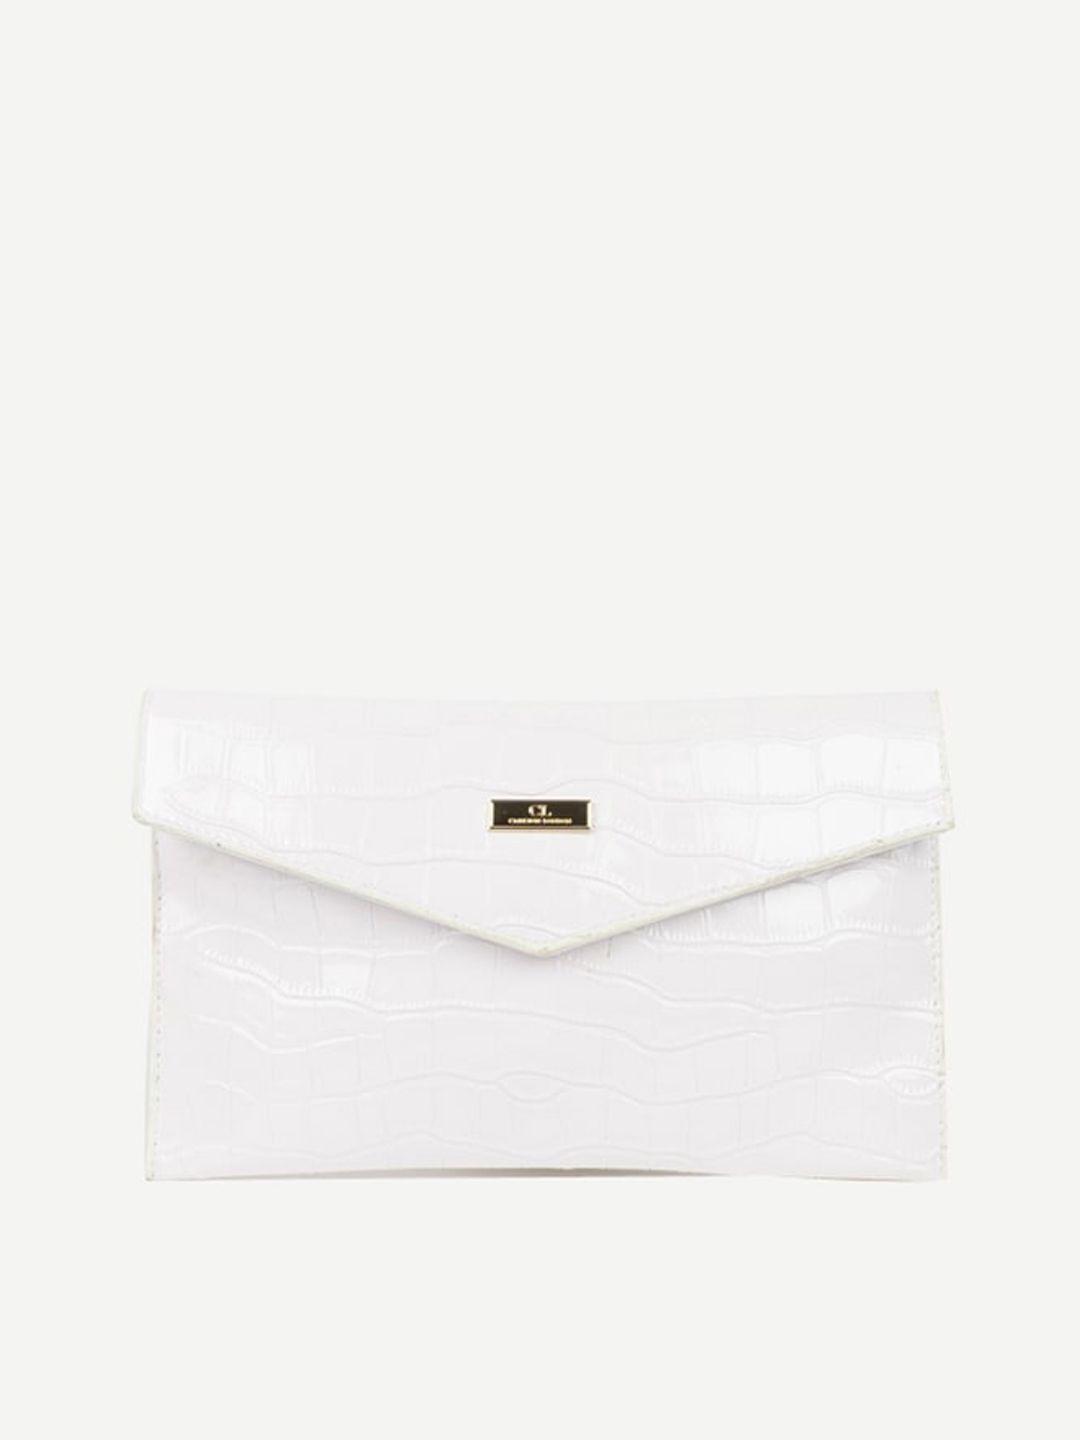 carlton london women white textured structured sling bag